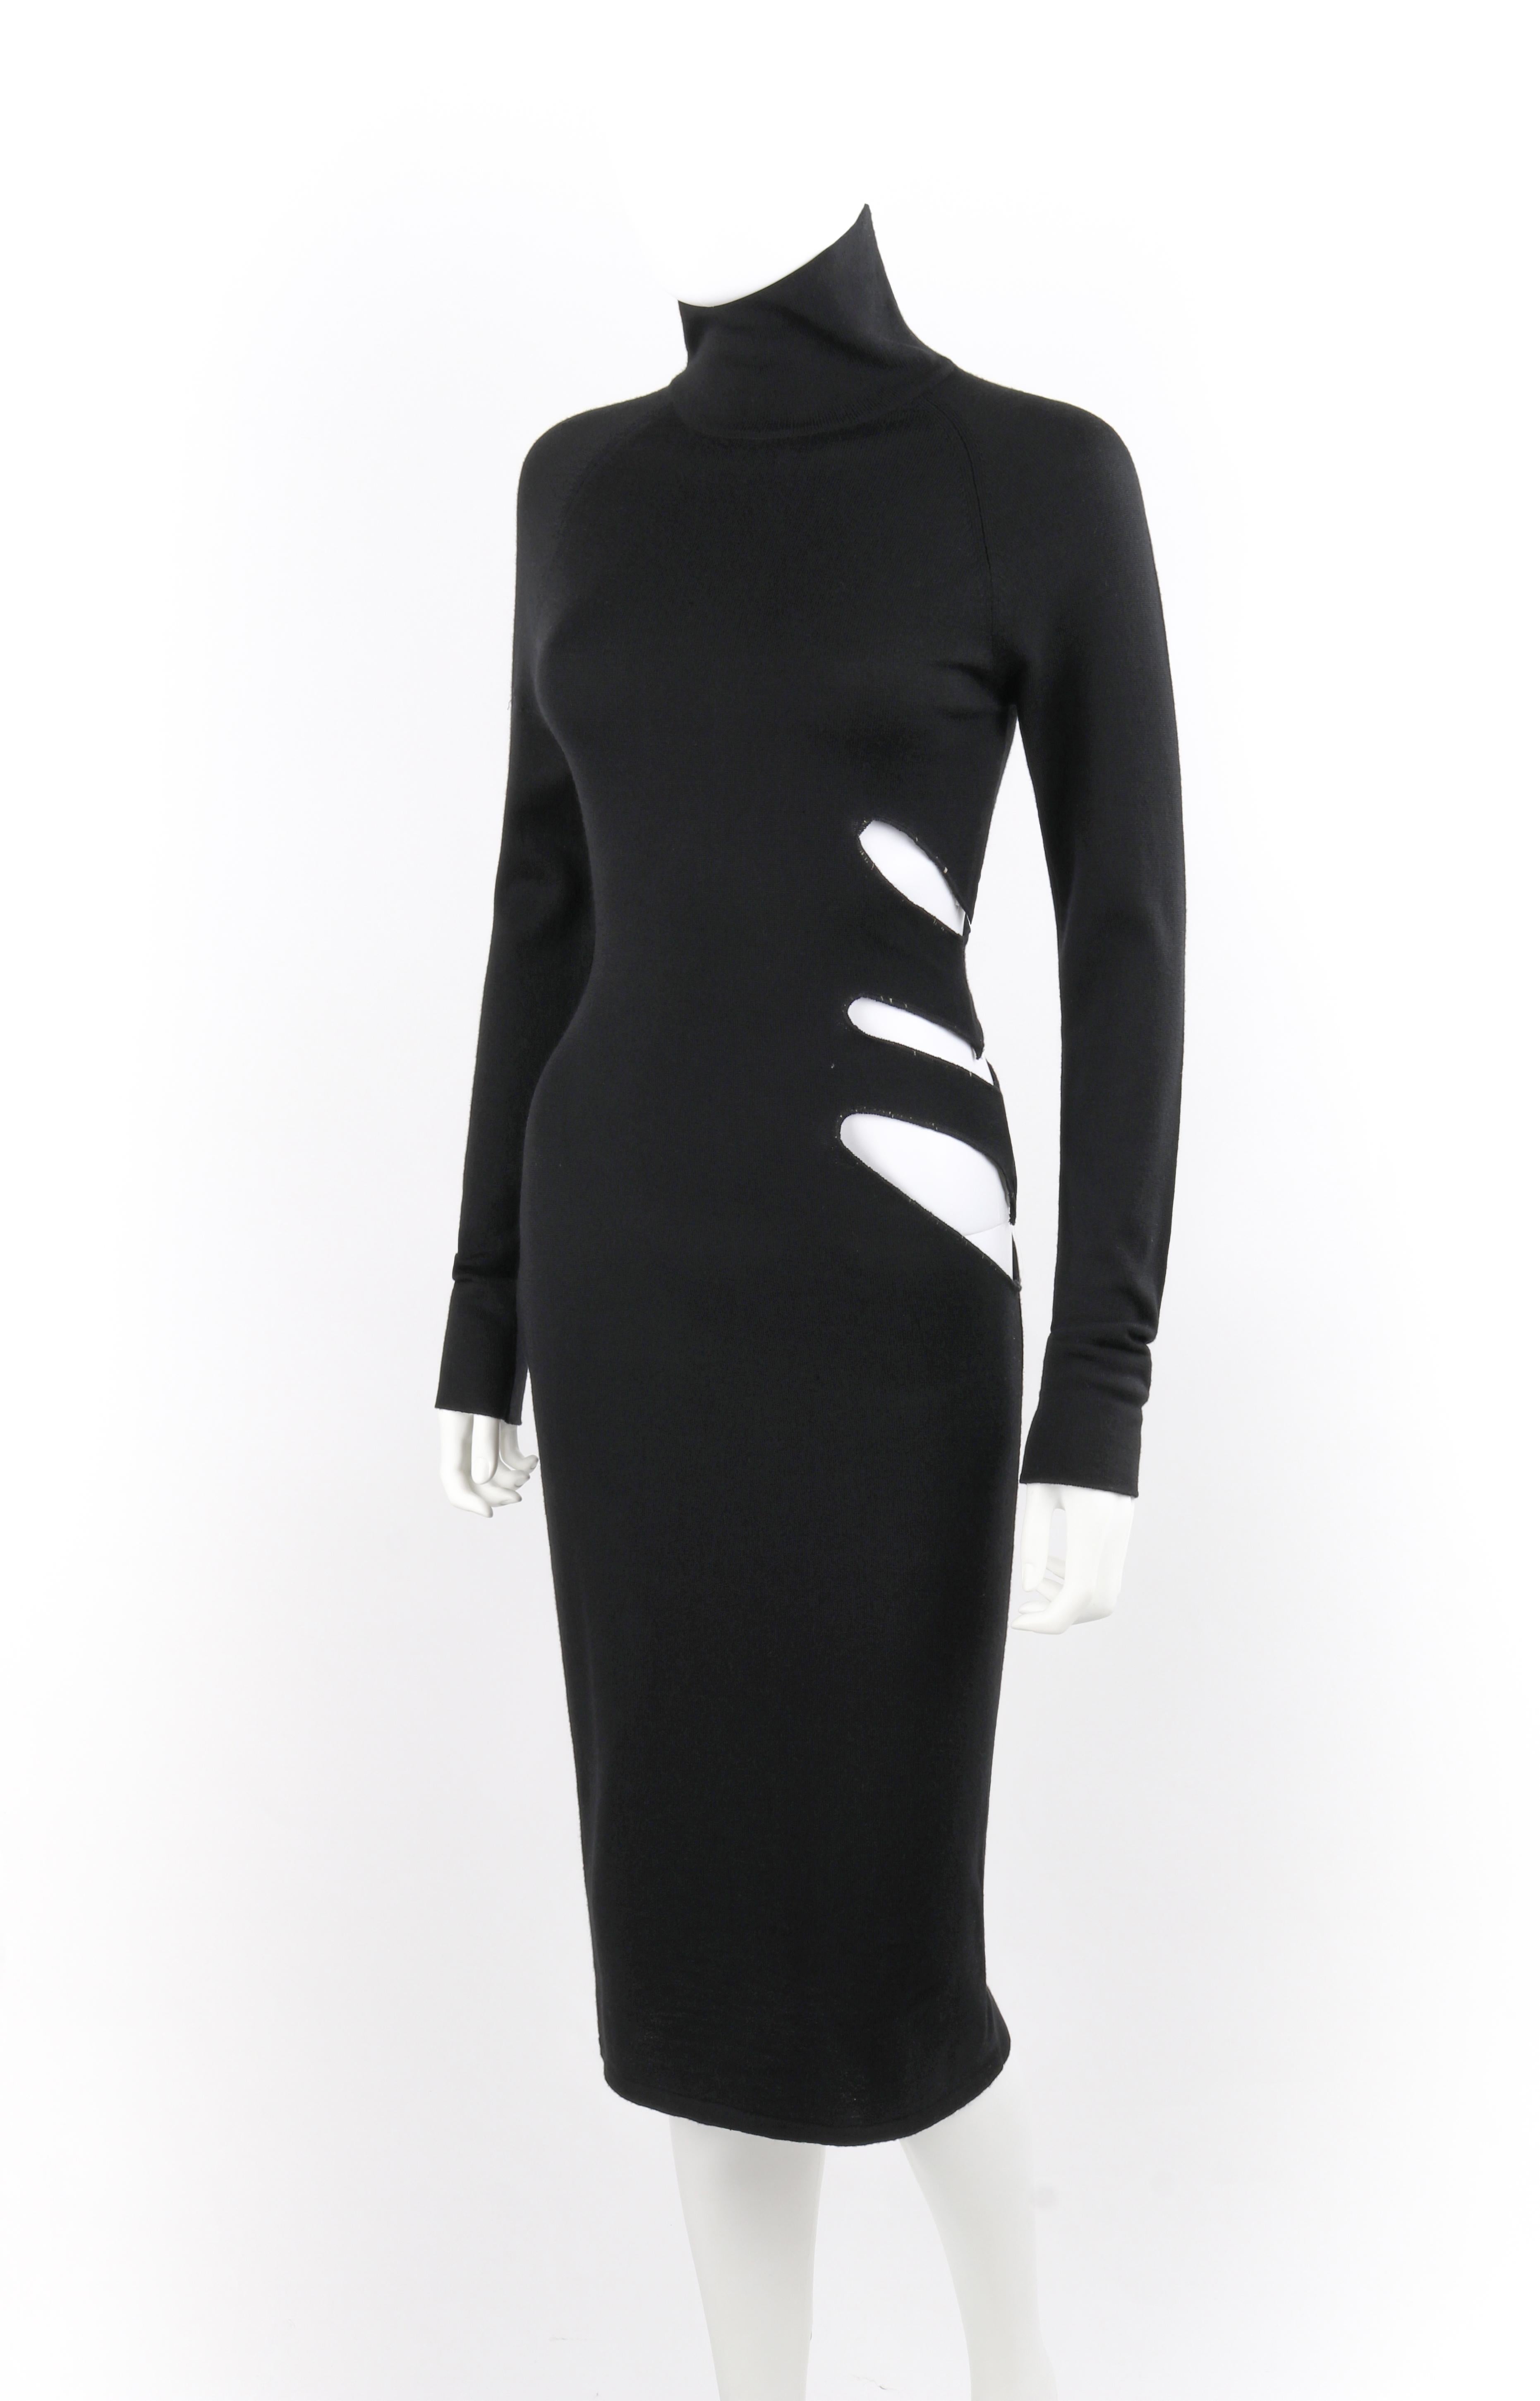 ALEXANDER McQUEEN S/S 1997 “La Poupée” Black Wool Illusion Cutout Cocktail Dress In Fair Condition For Sale In Thiensville, WI